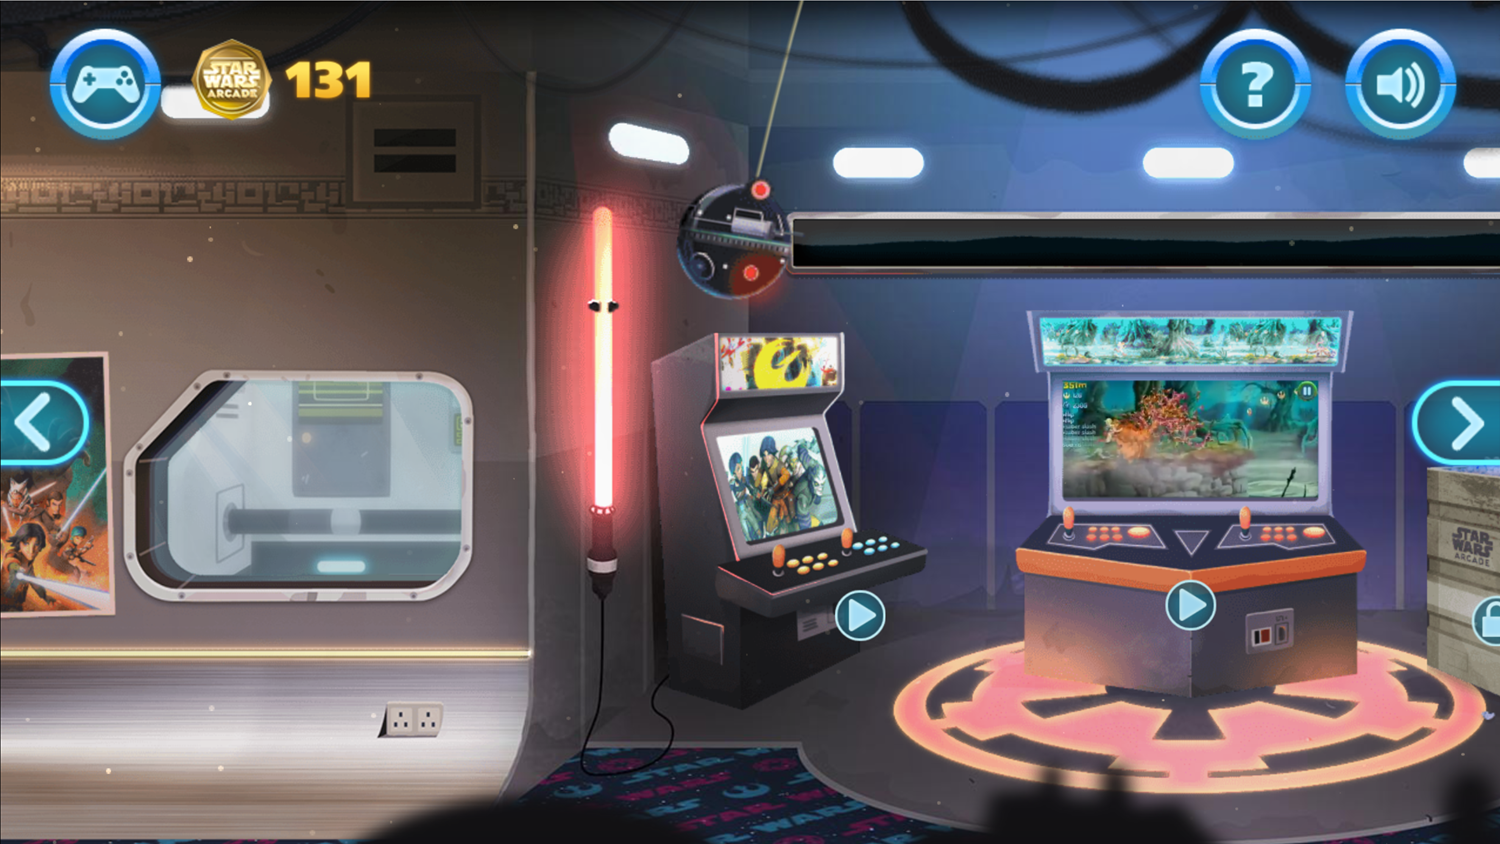 Star Wars Arcade Game Screenshot.